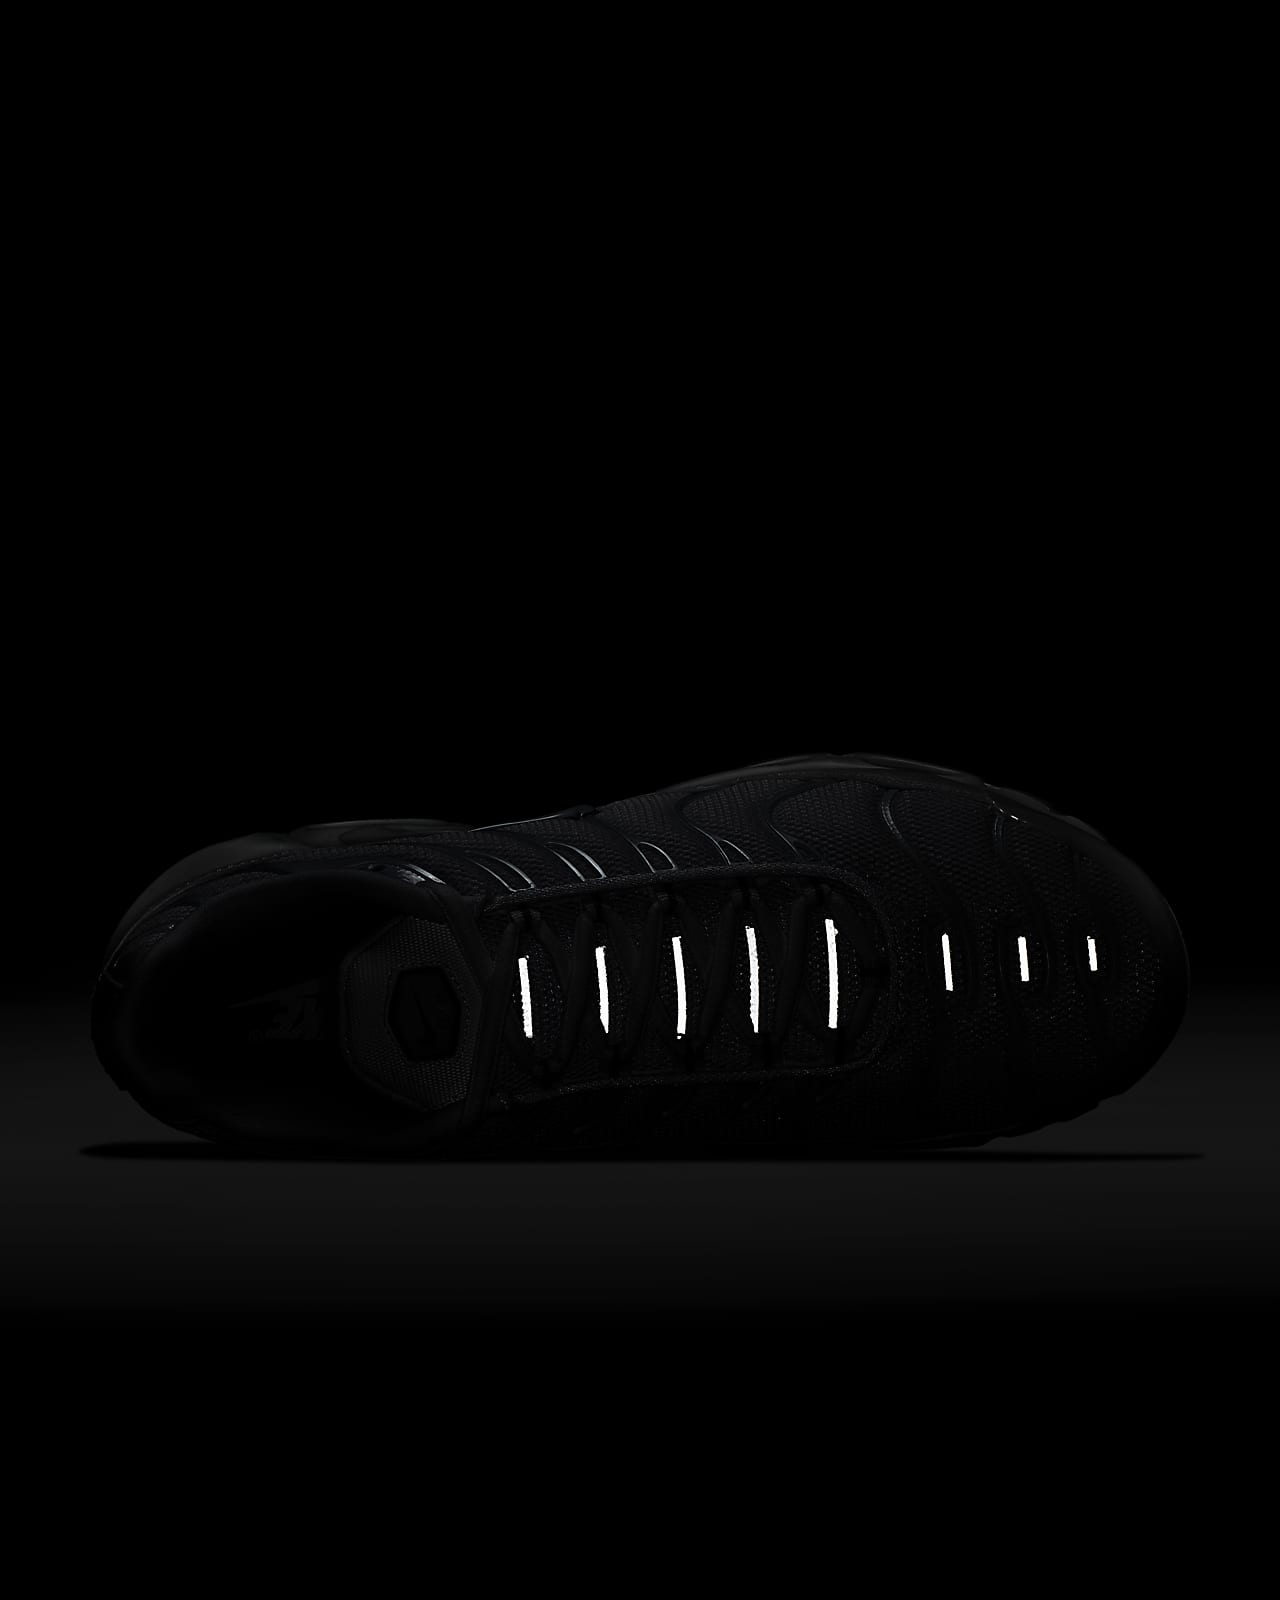 Chaussure Nike Air Max Plus pour Homme